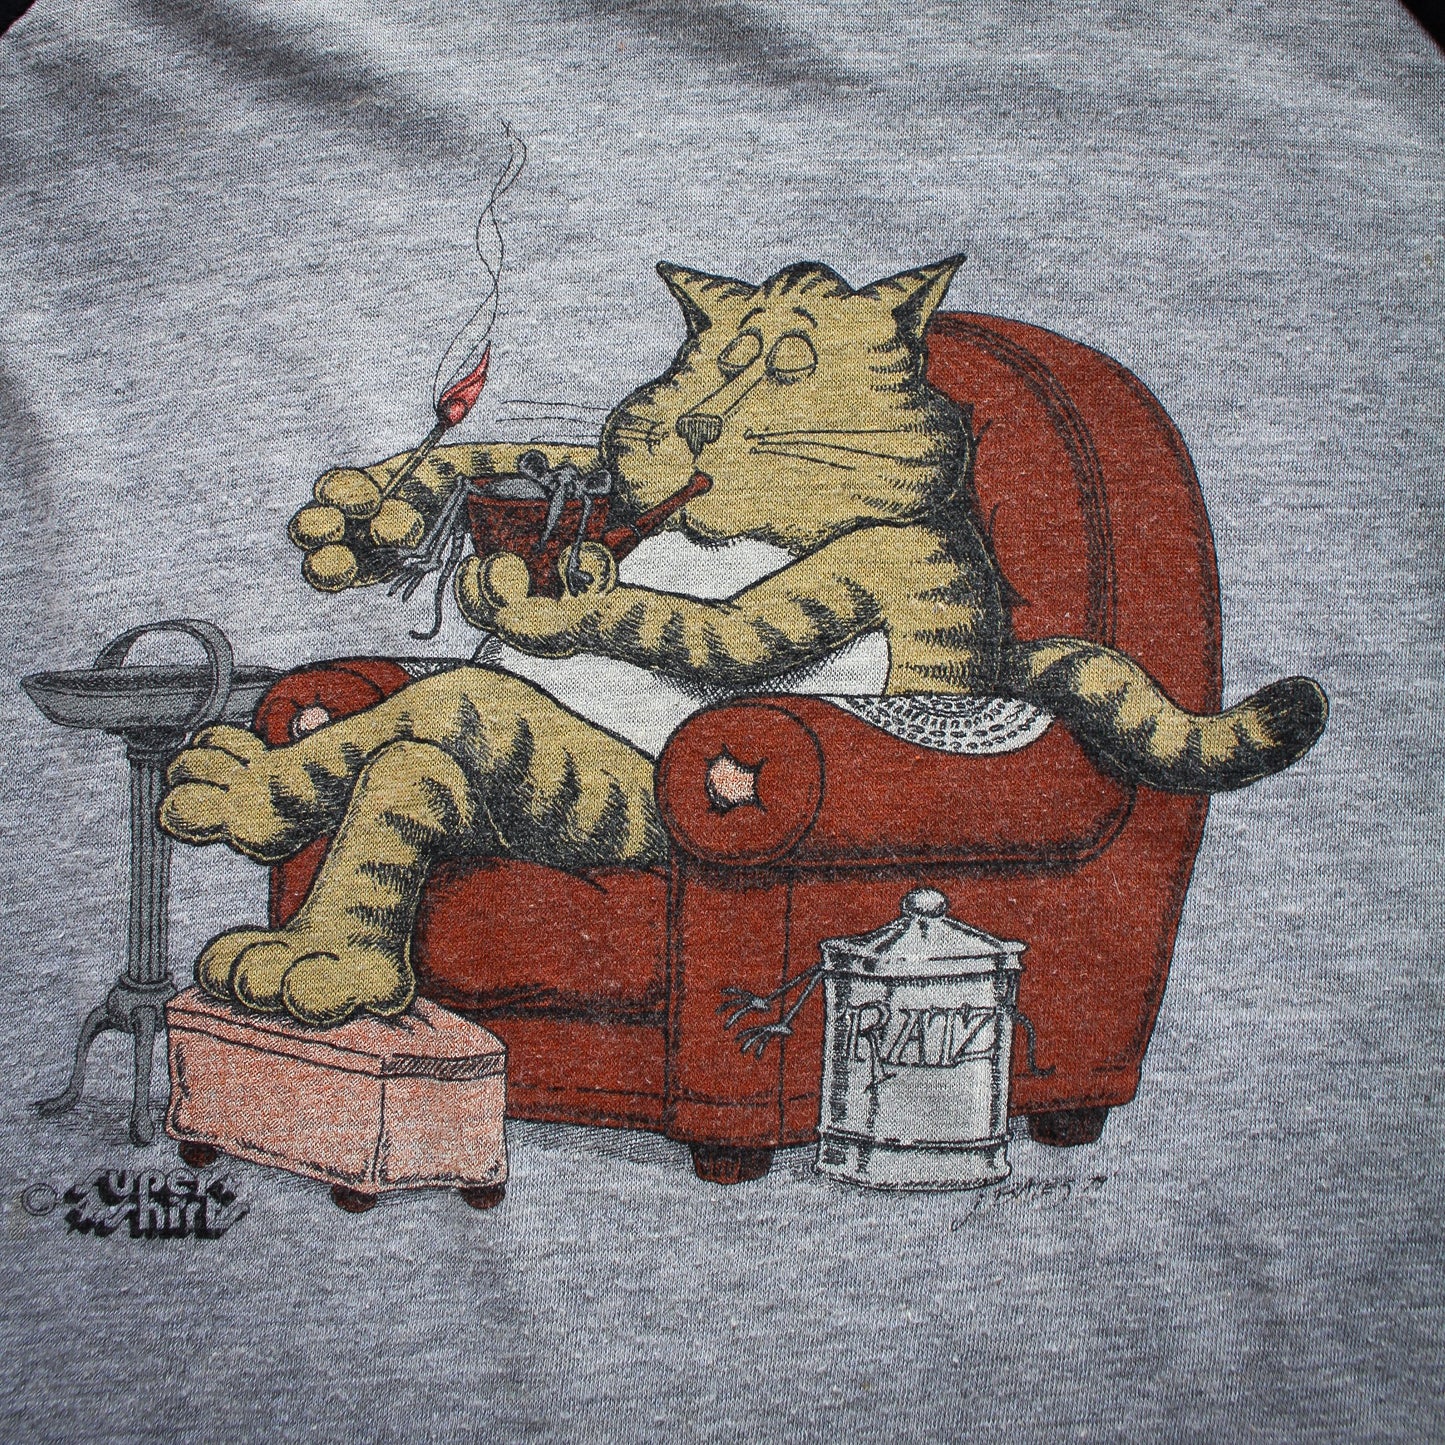 70s Smokin' On Rats Raglan Cat T-Shirt - L/XL